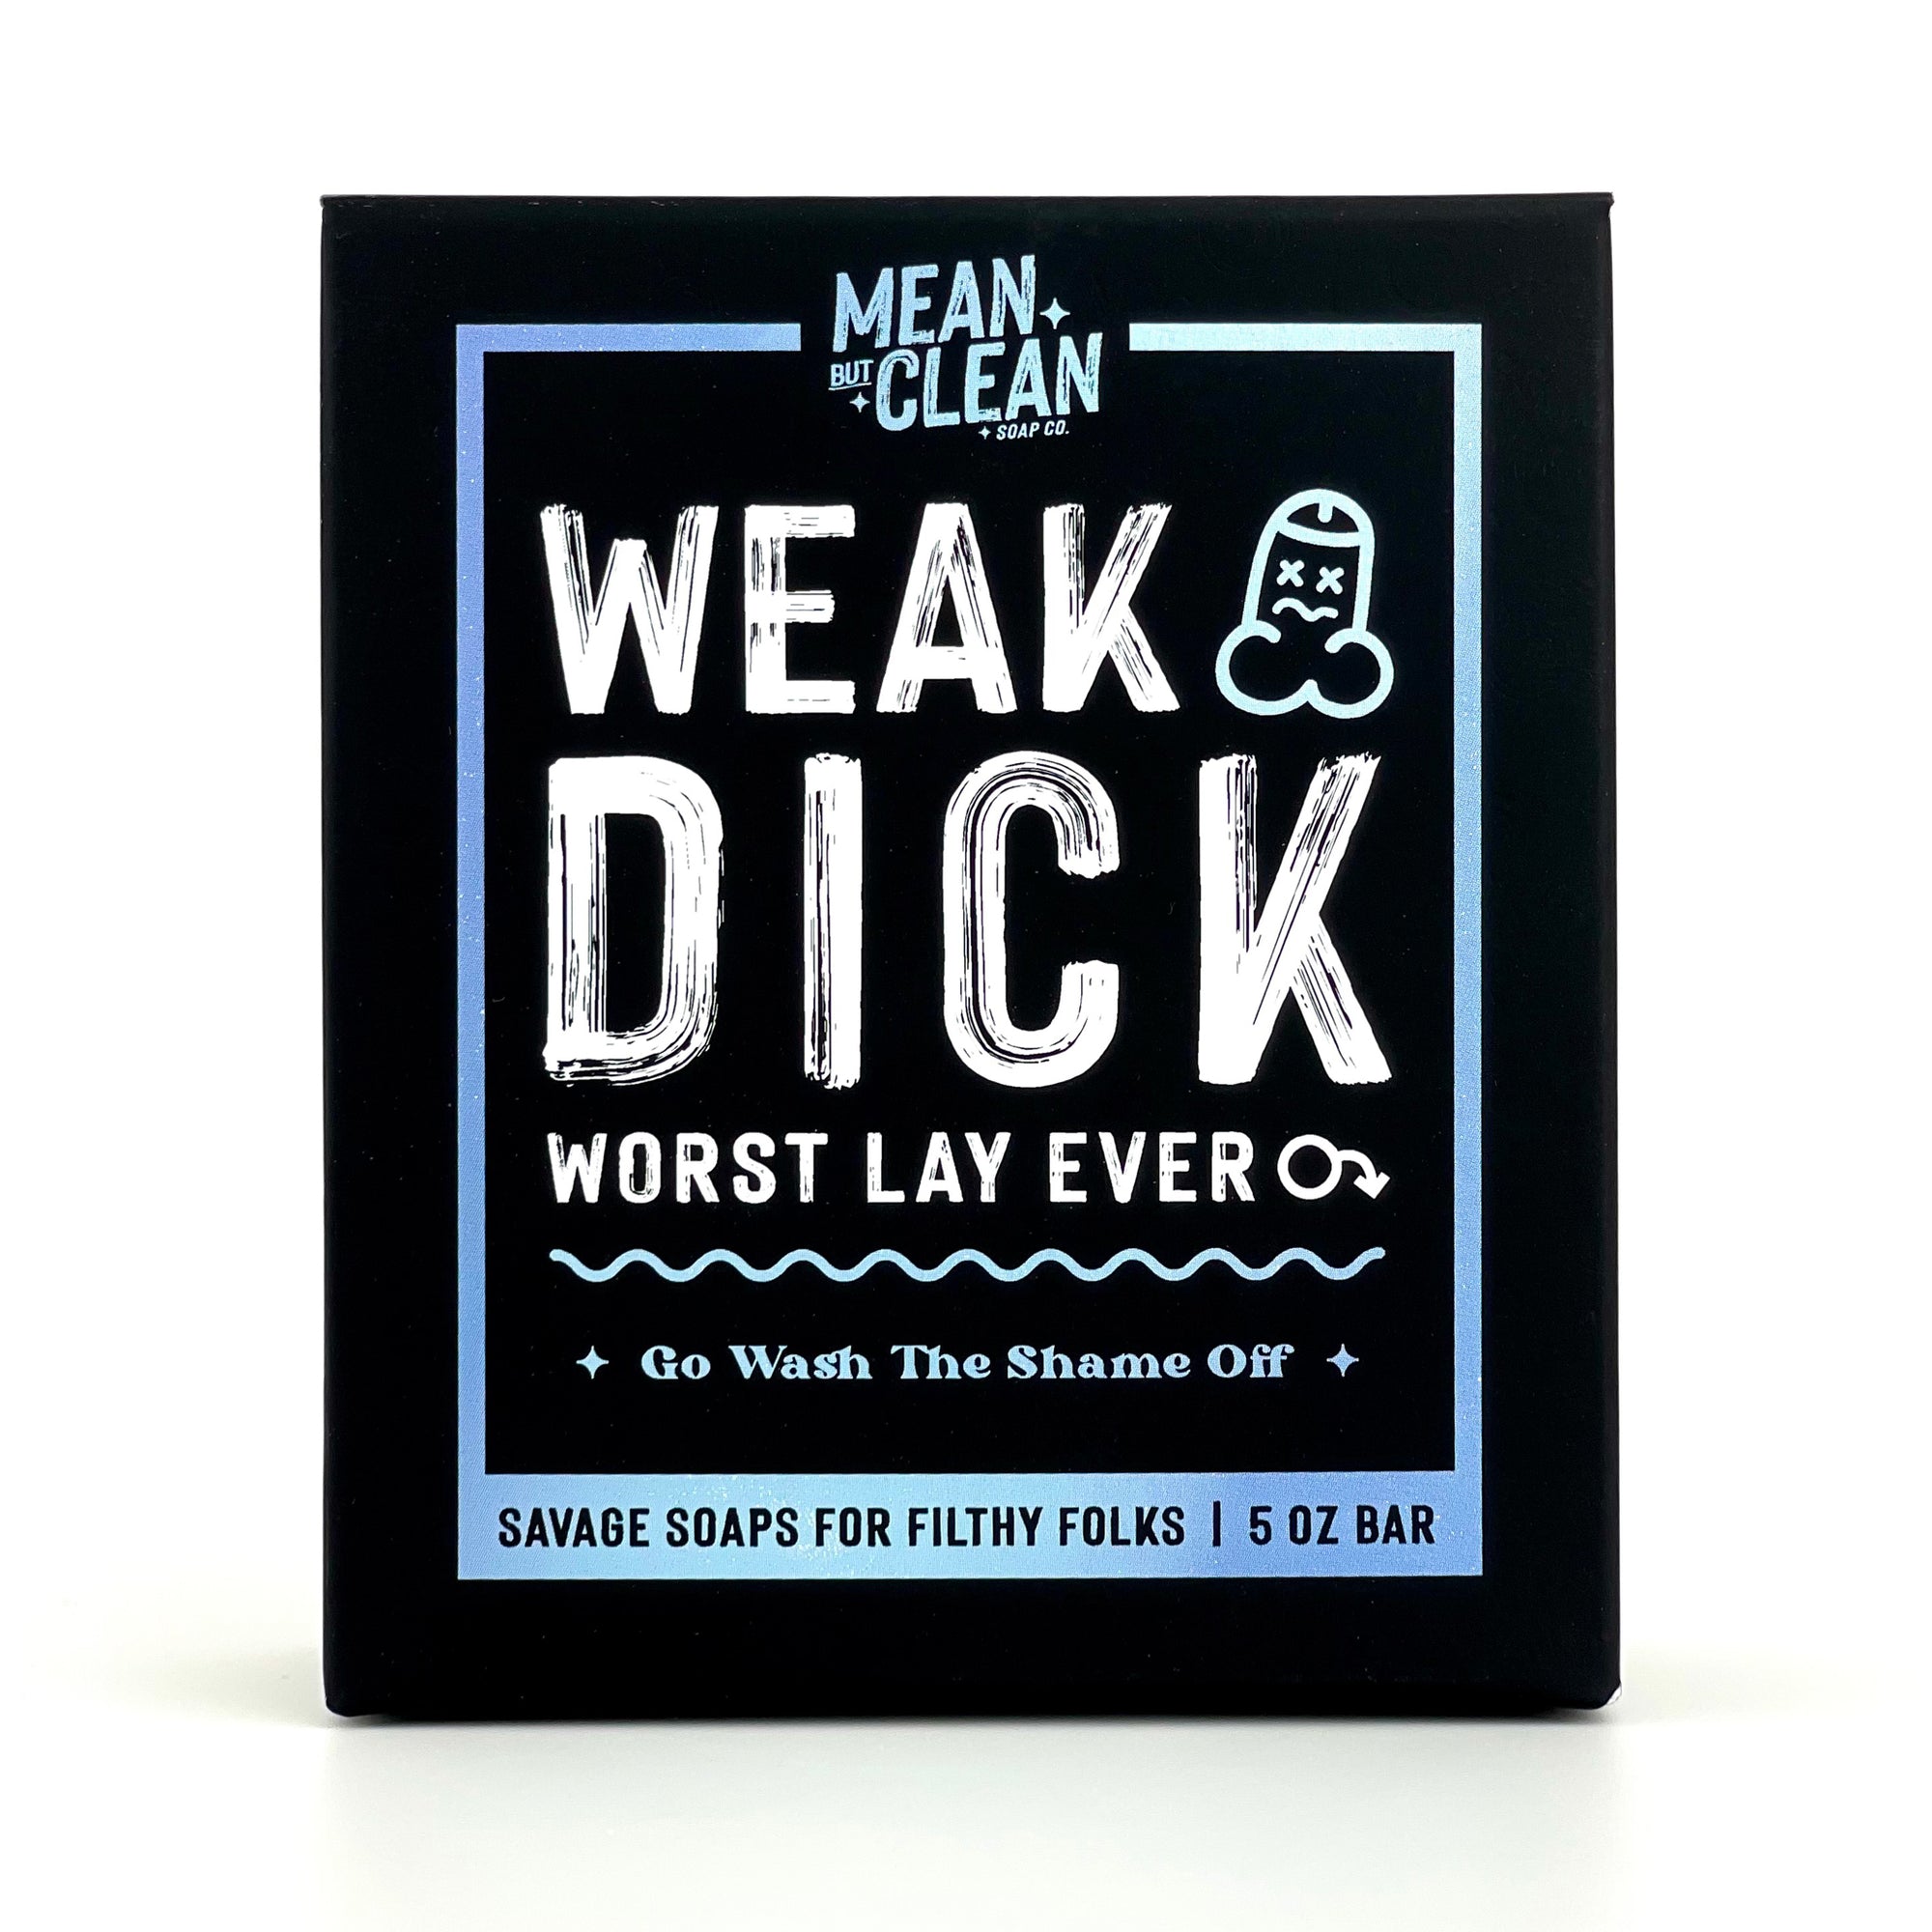 Weak Dick - Tobacco Bay Soap Soap - Natural Handmade Soap - Funny Gag Gift For Friends